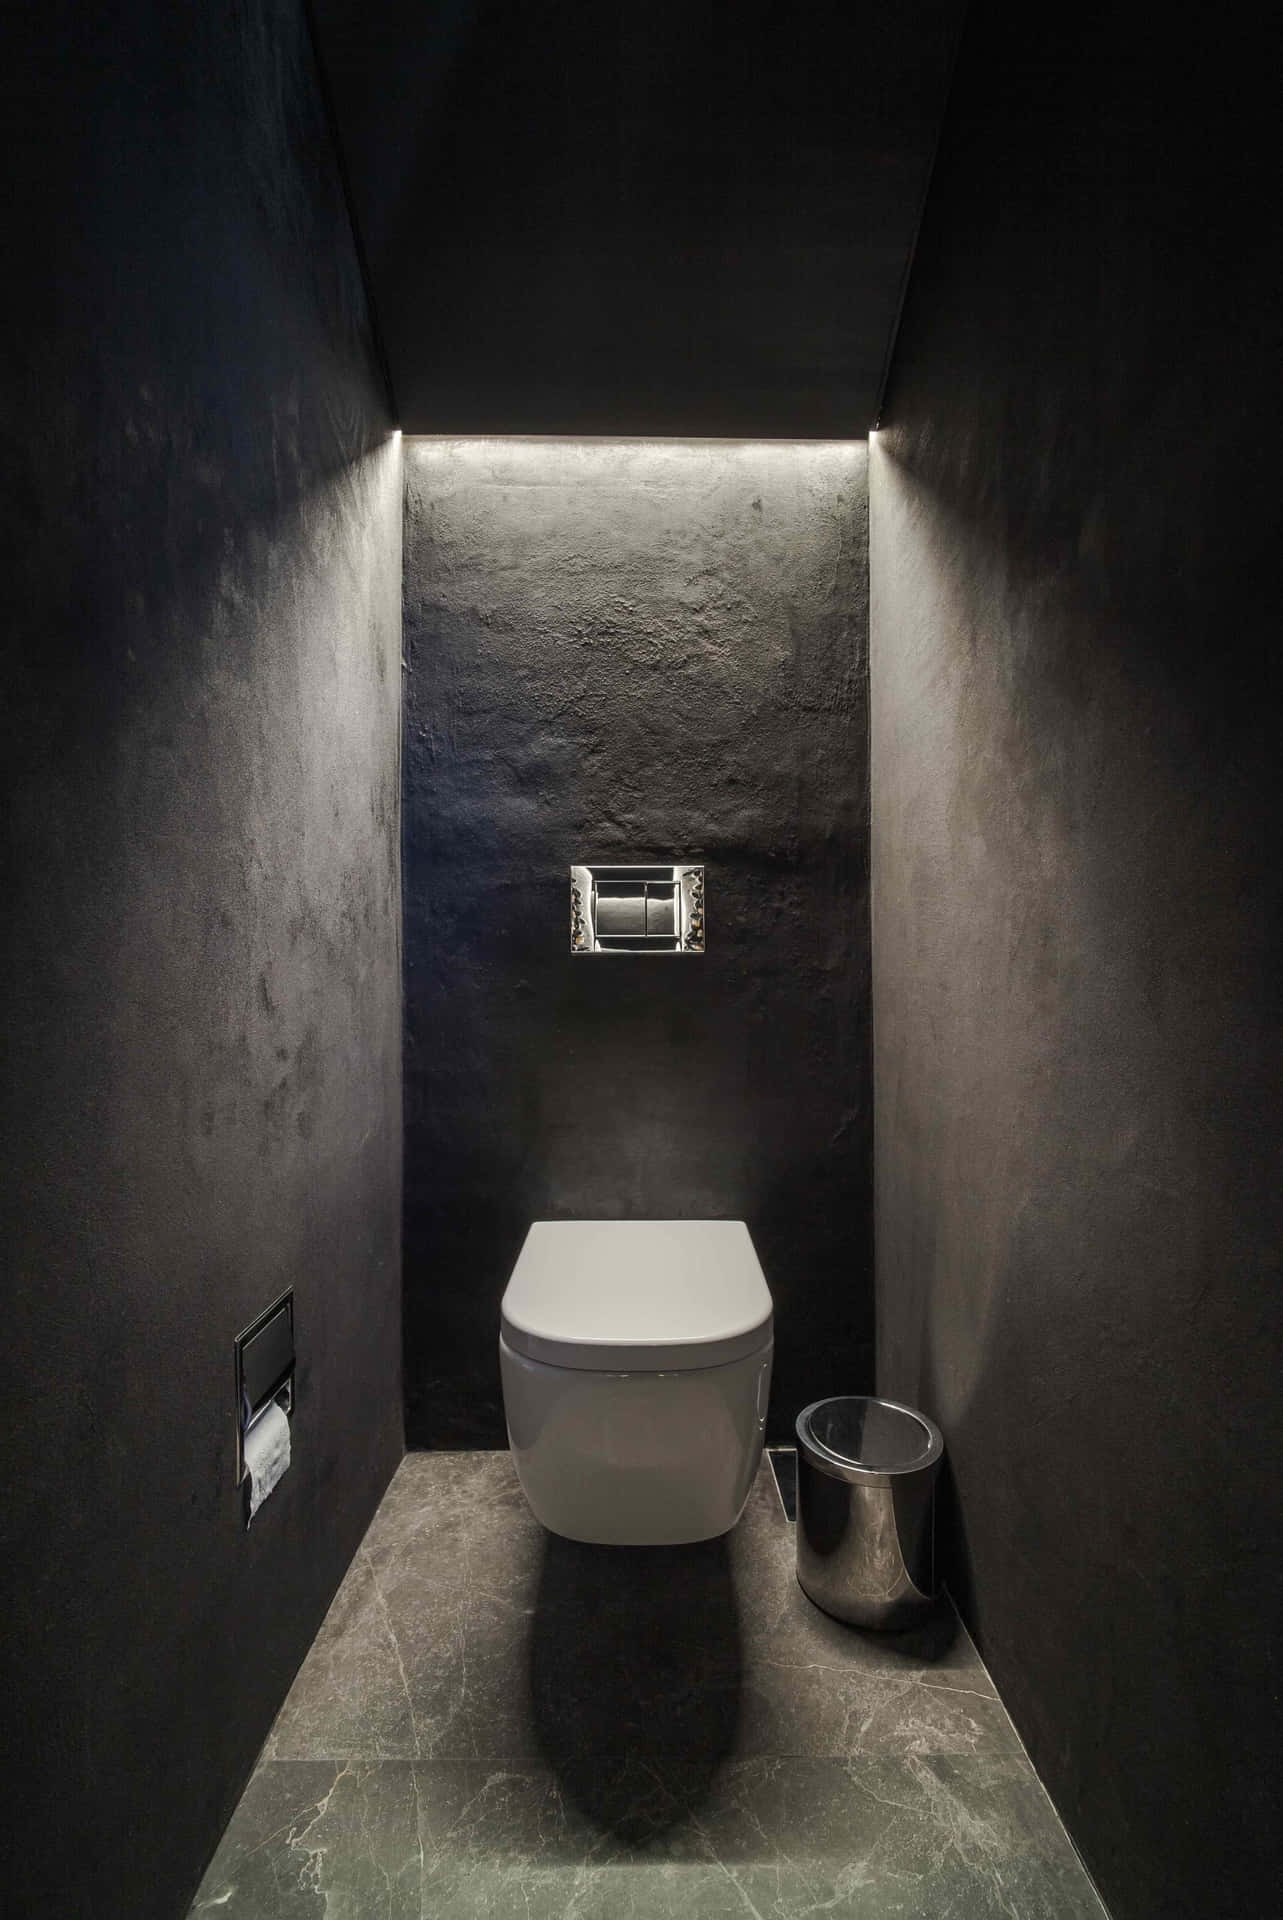 Modern, pristine white toilet in a sleek and stylish bathroom